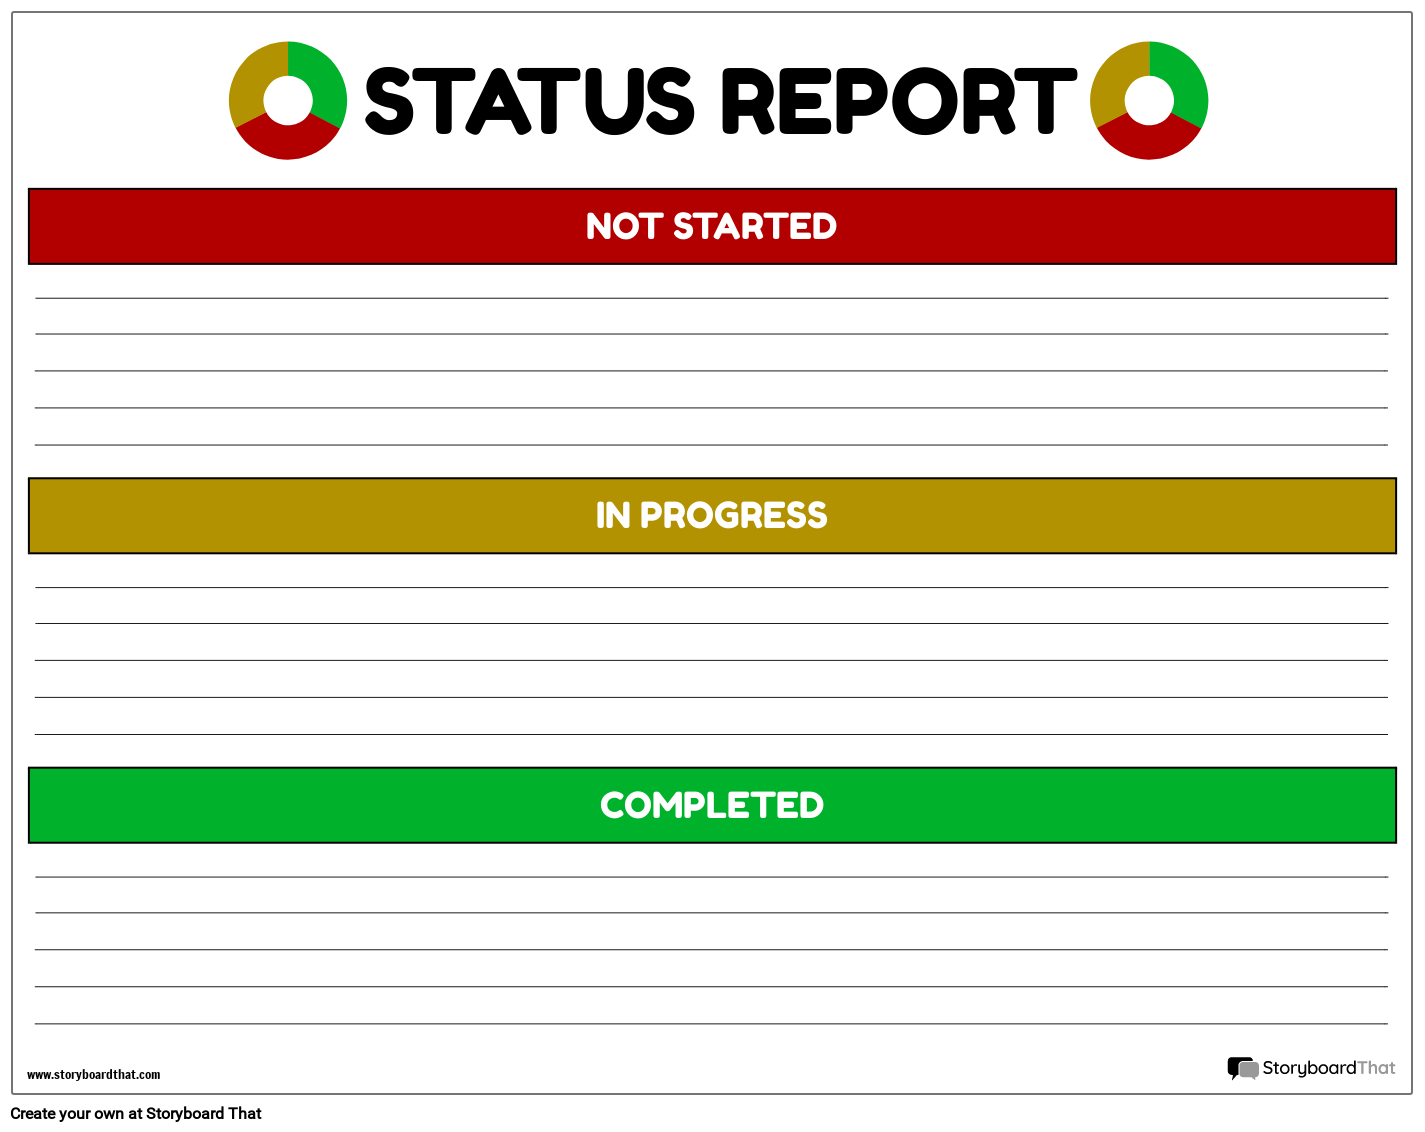 Status Report 2